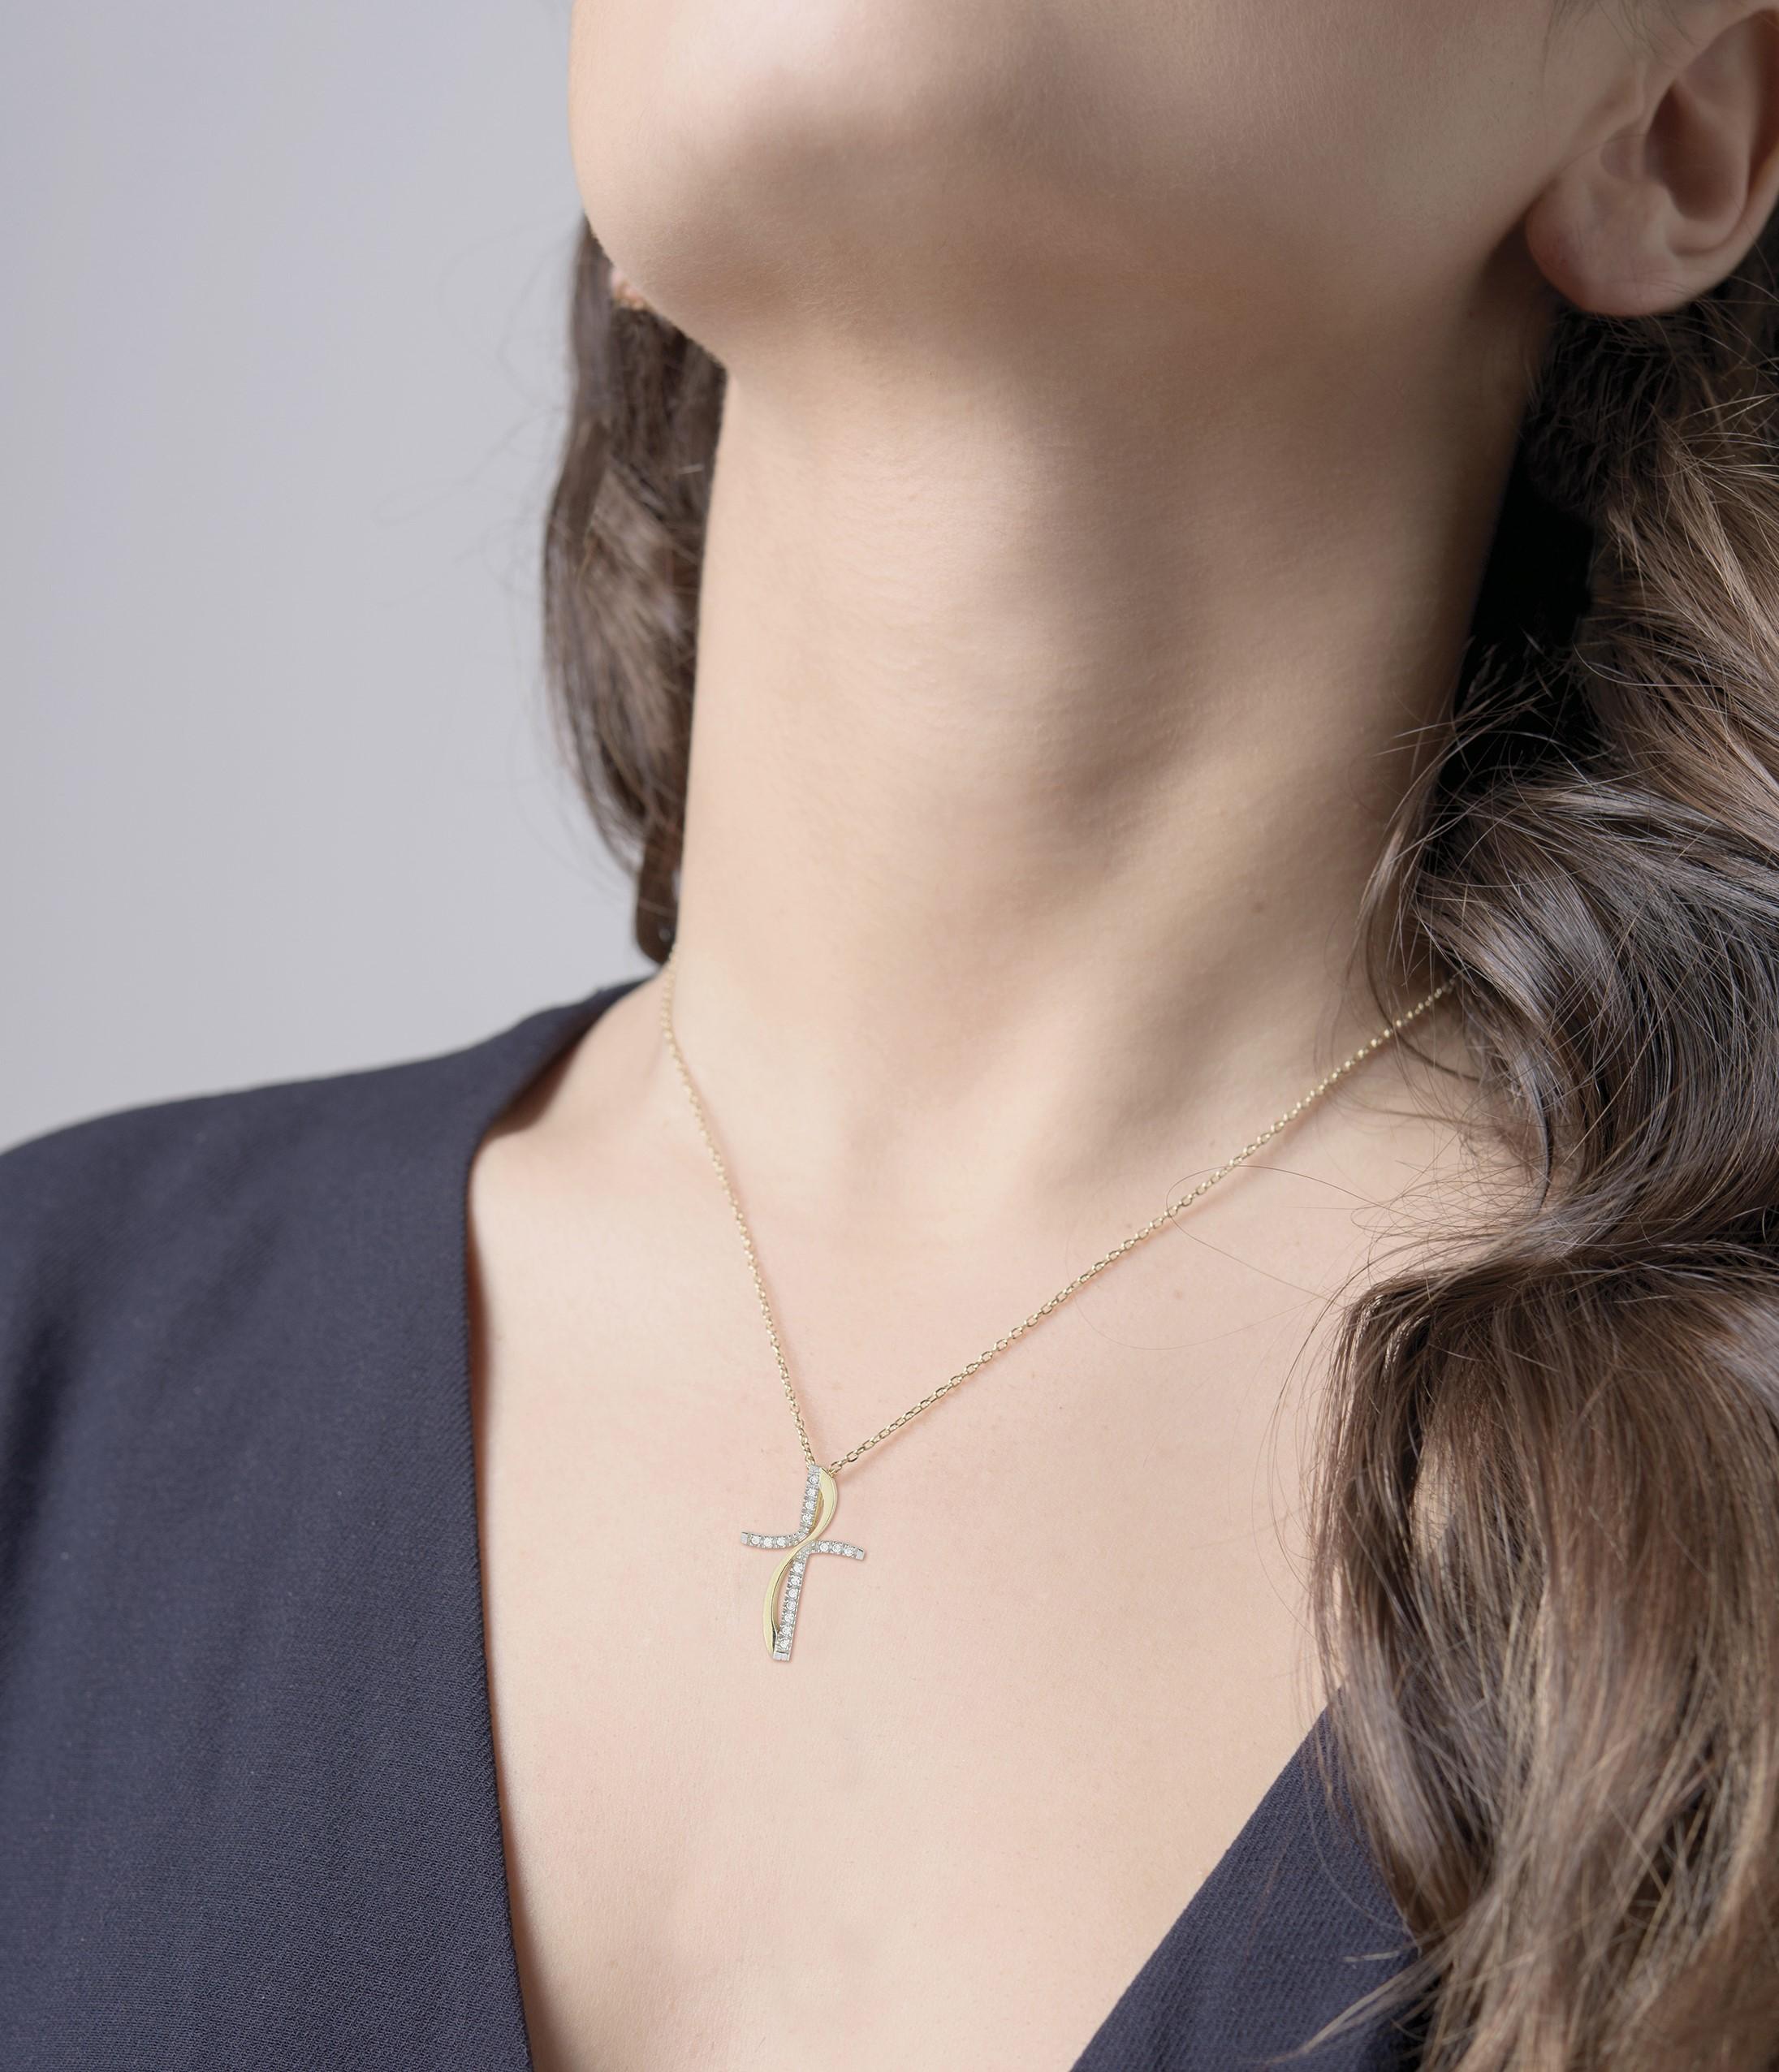 methodist cross necklace